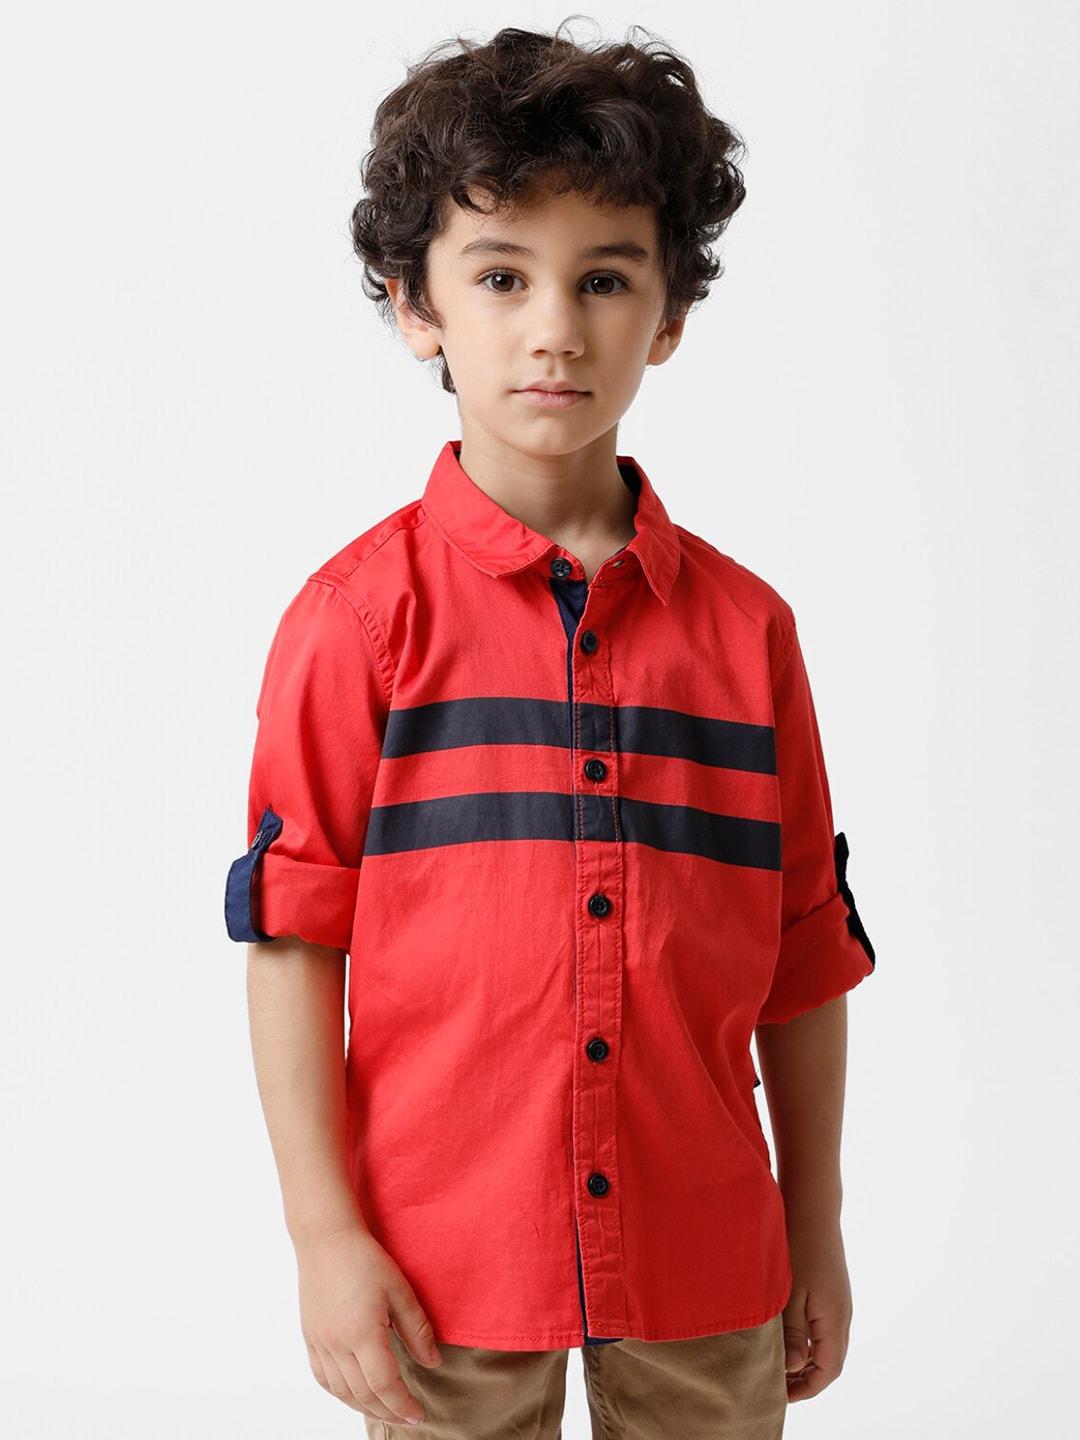 kate & oscar boys red standard striped casual shirt